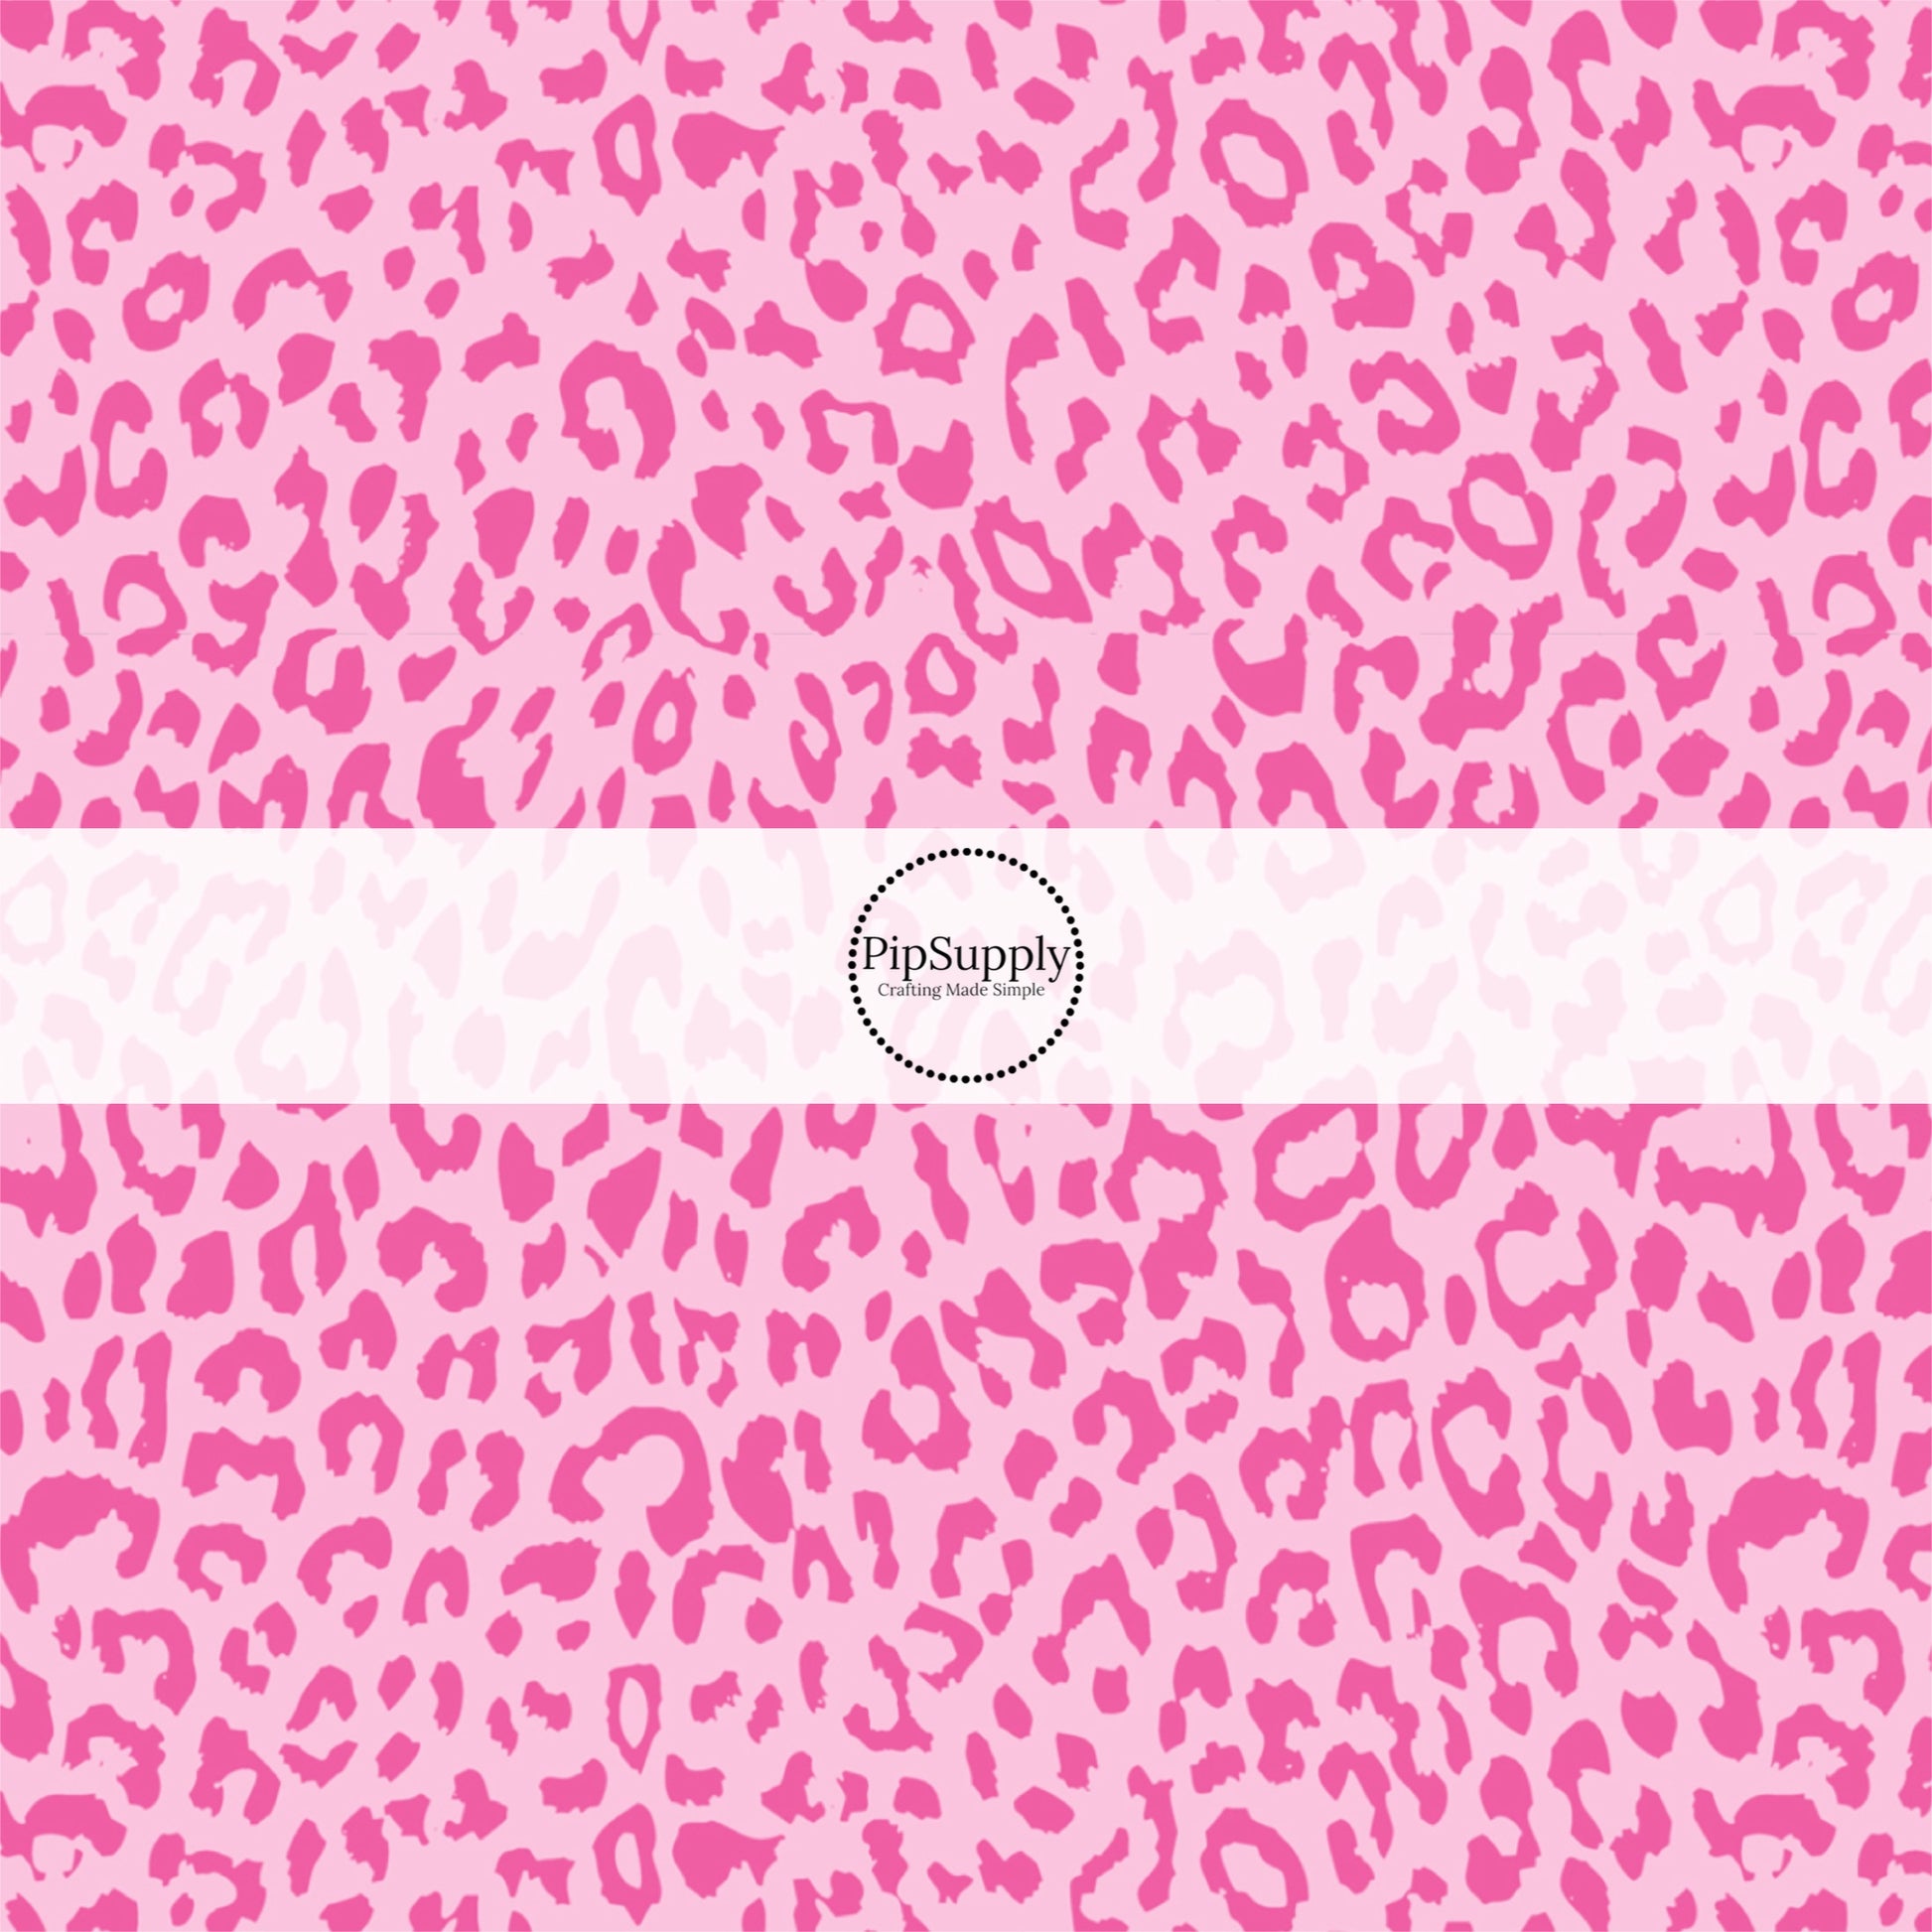 Leopard print fabric - cheetah print Wallpaper